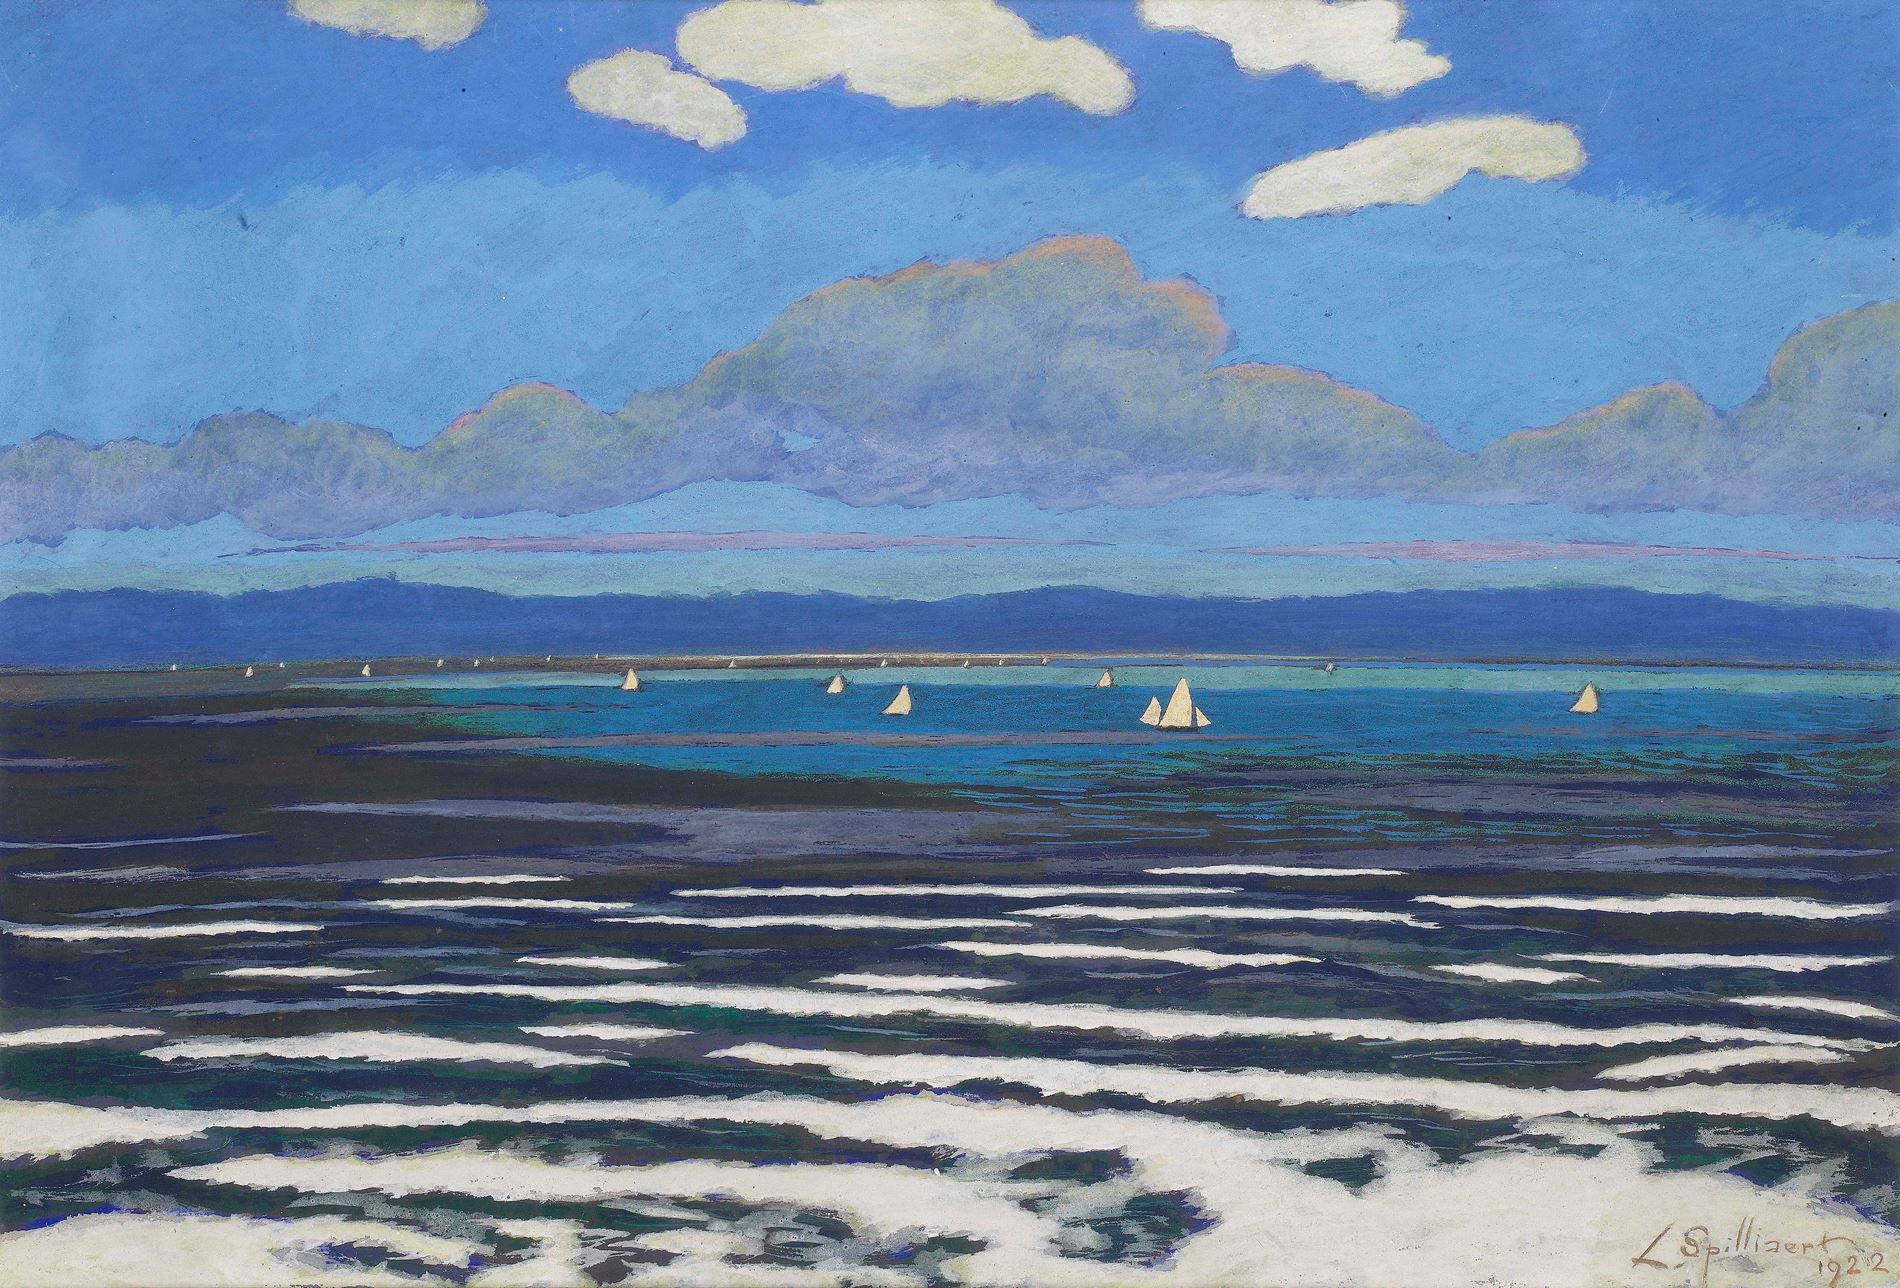 Léon SPILLIAERT | Seascape with White Sails